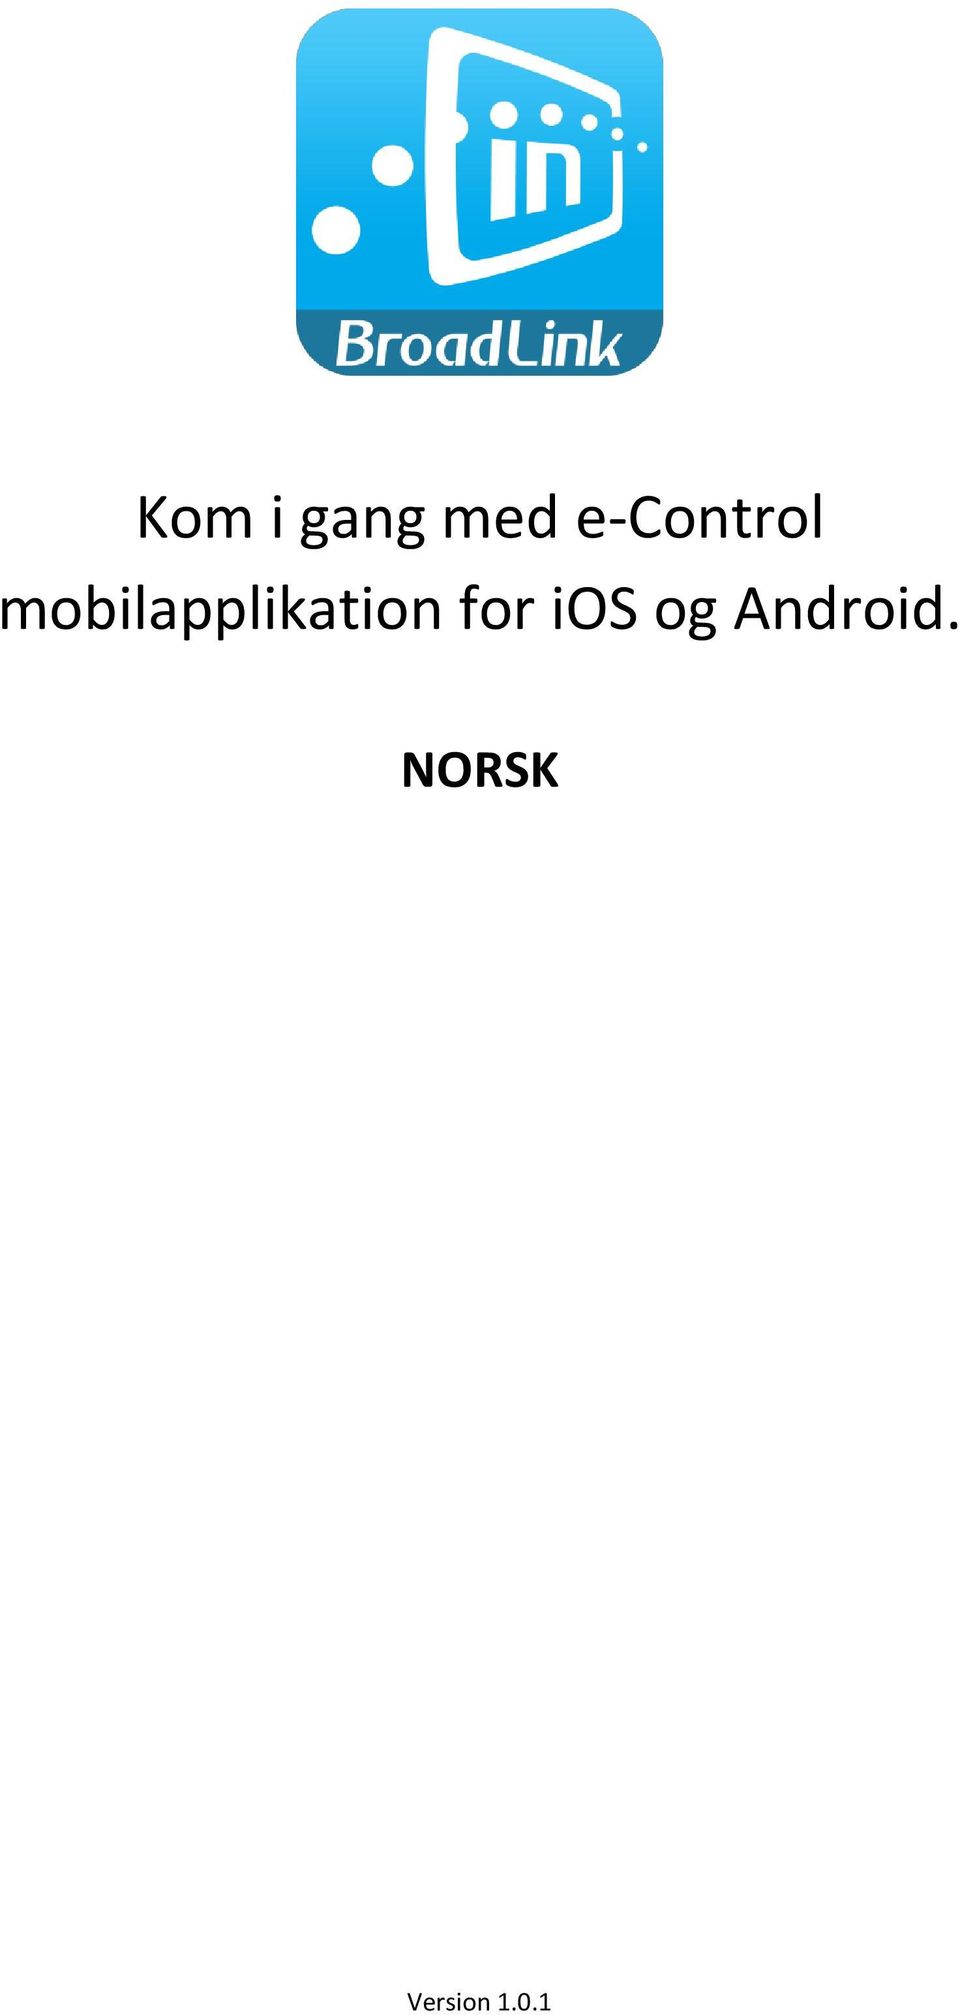 mobilapplikation for